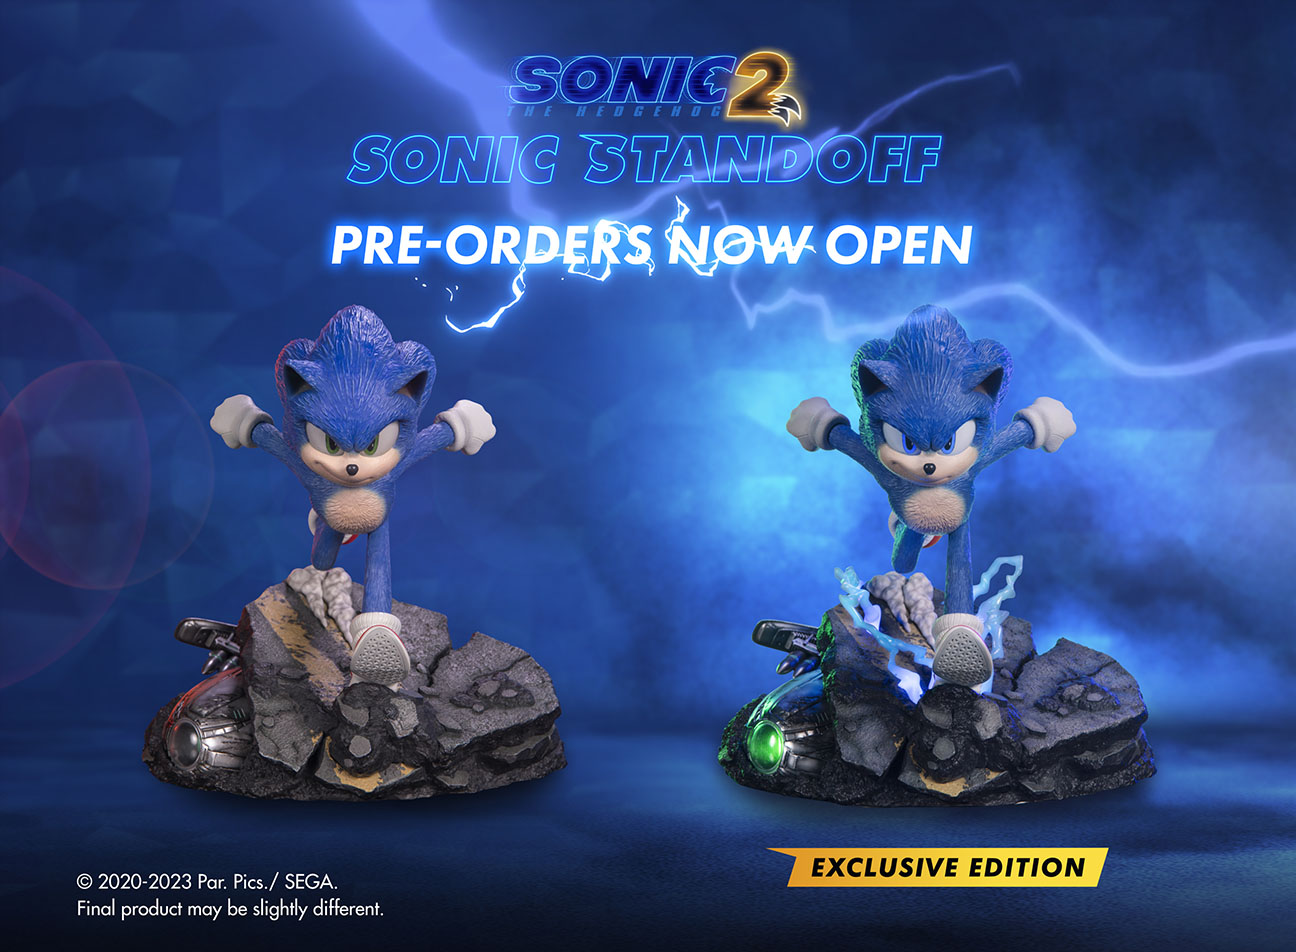 Buy SEGA Sonic Adventure 2 Battle Acrylic Pin Sonic the Hedgehog Online in  India 